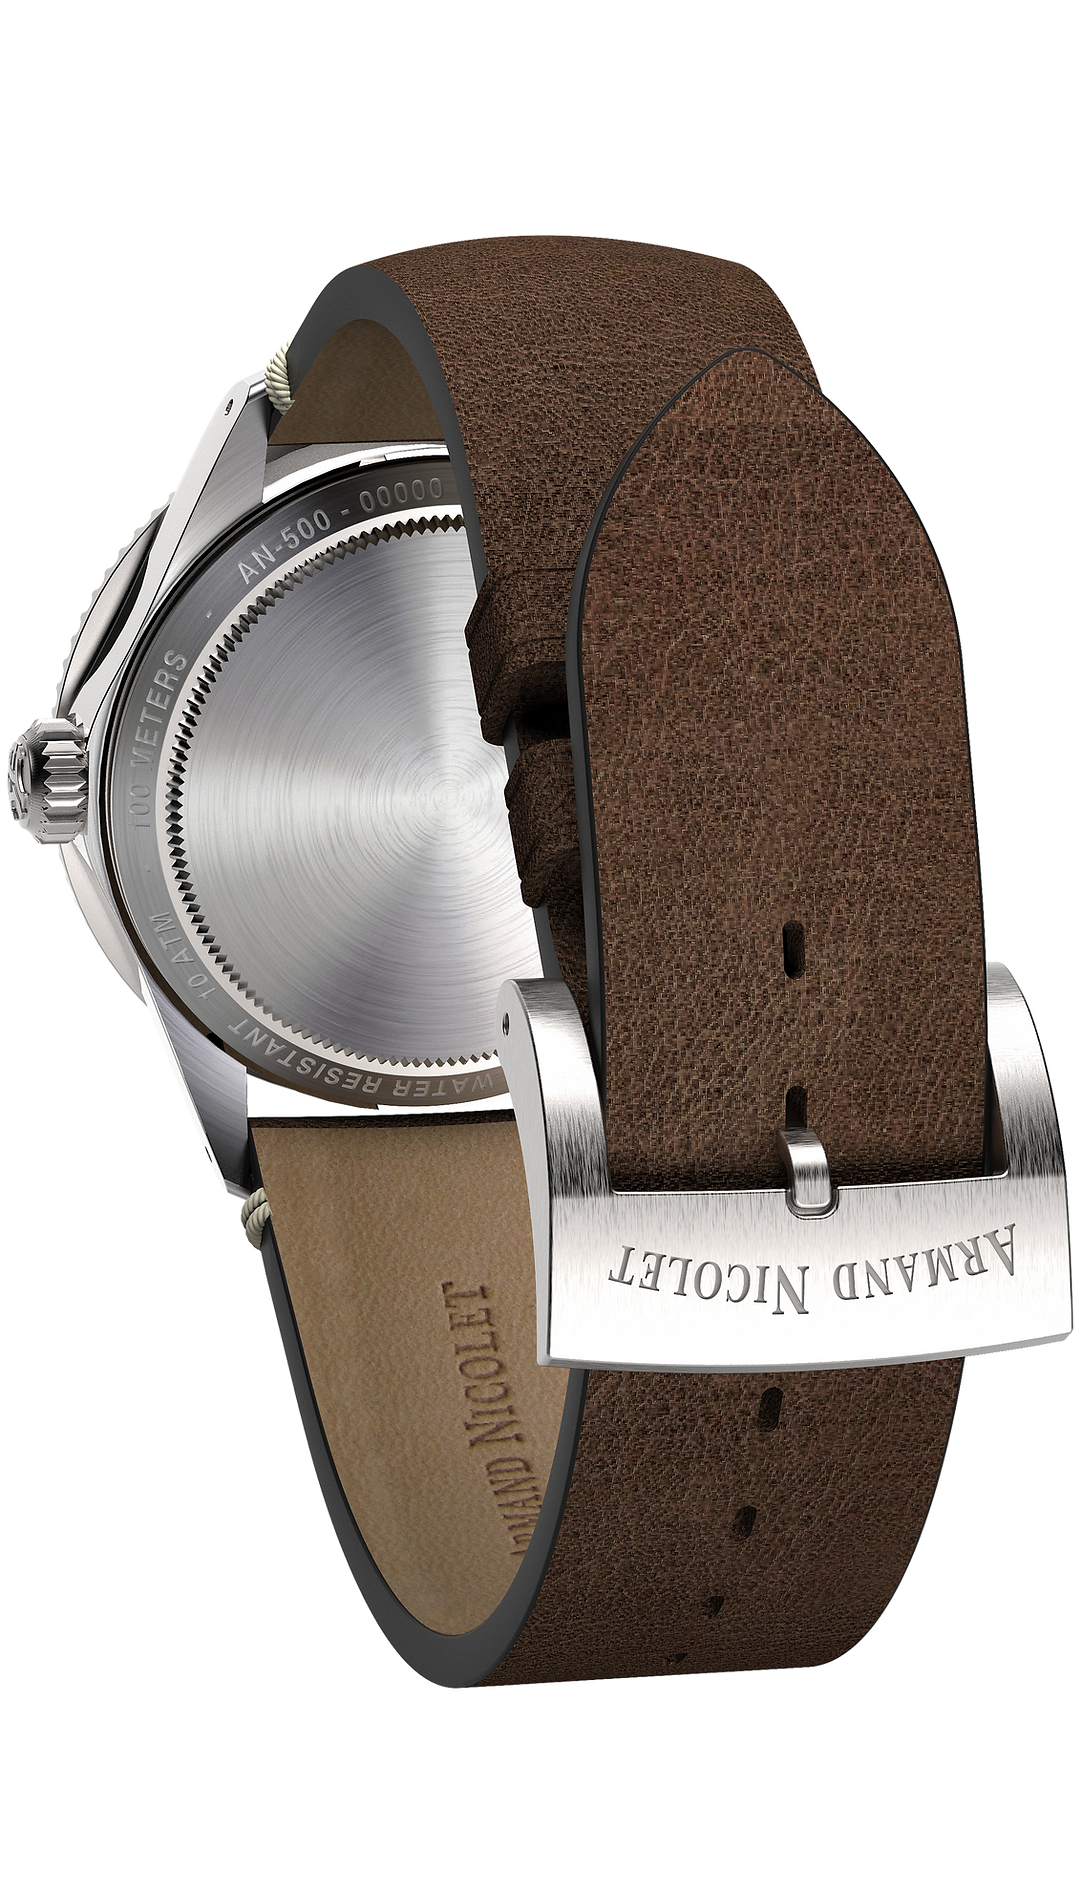 Armand Nicolet Men's Watch VS1 Date 38mm Silver Brown A500AXAA-AS-BP19500MAC